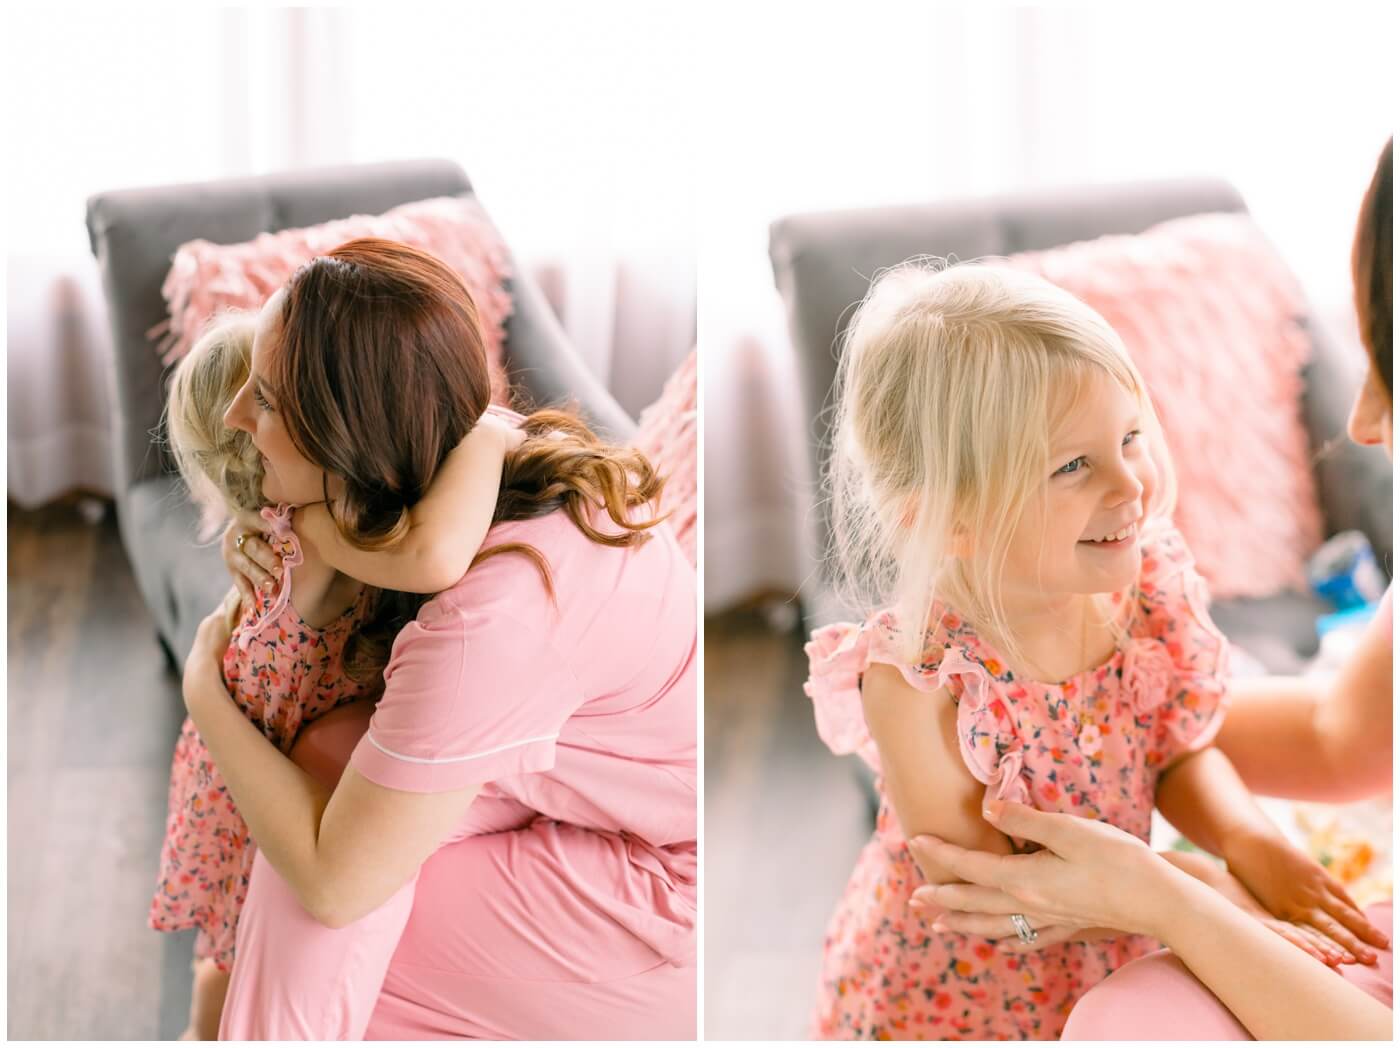 the flowergirl hugging her mom